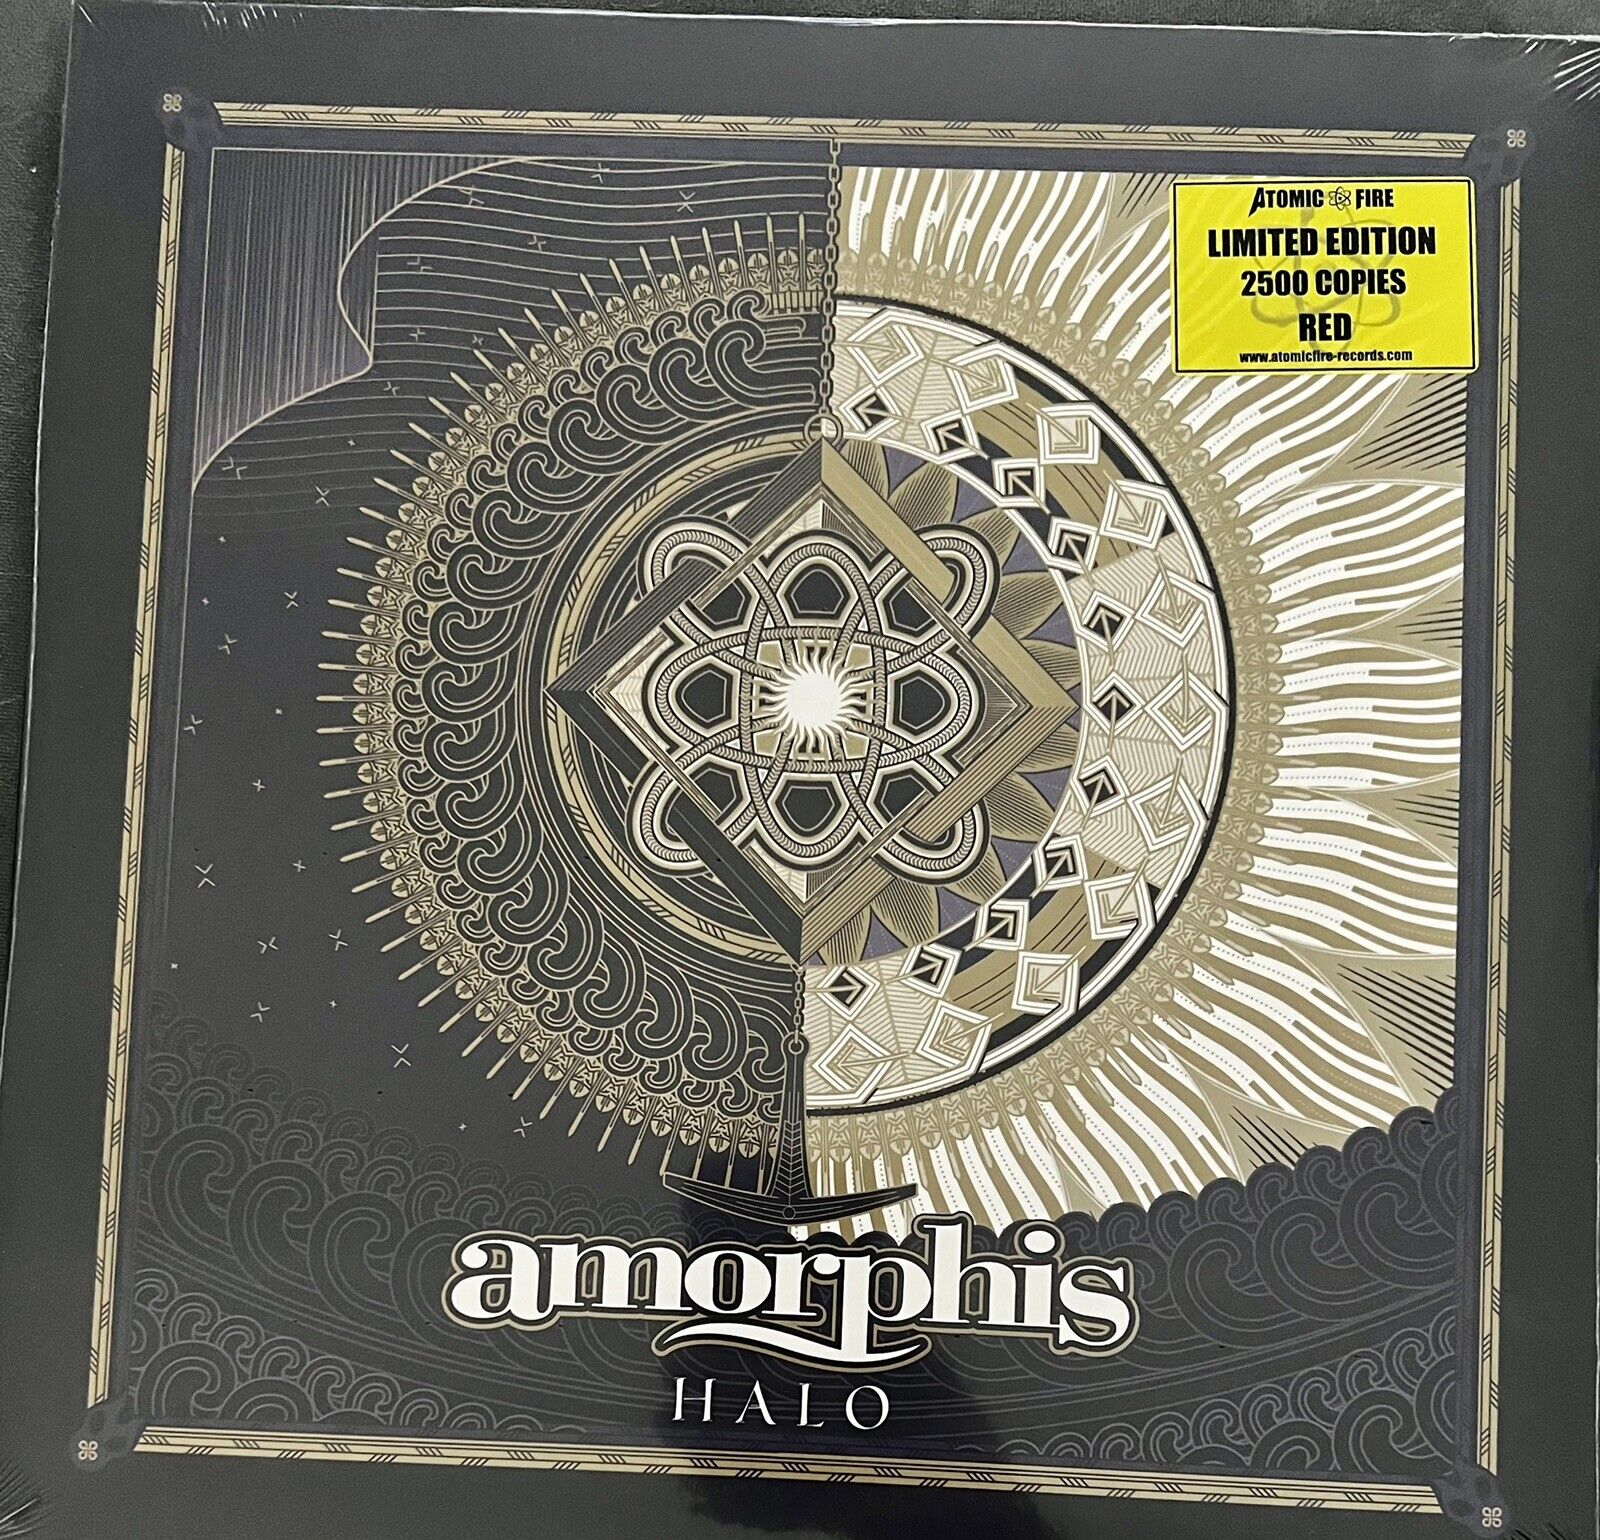 AMORPHIS - Halo 2 x LP - RED COLORED VINYL ALBUM - SEALED NEW RECORD